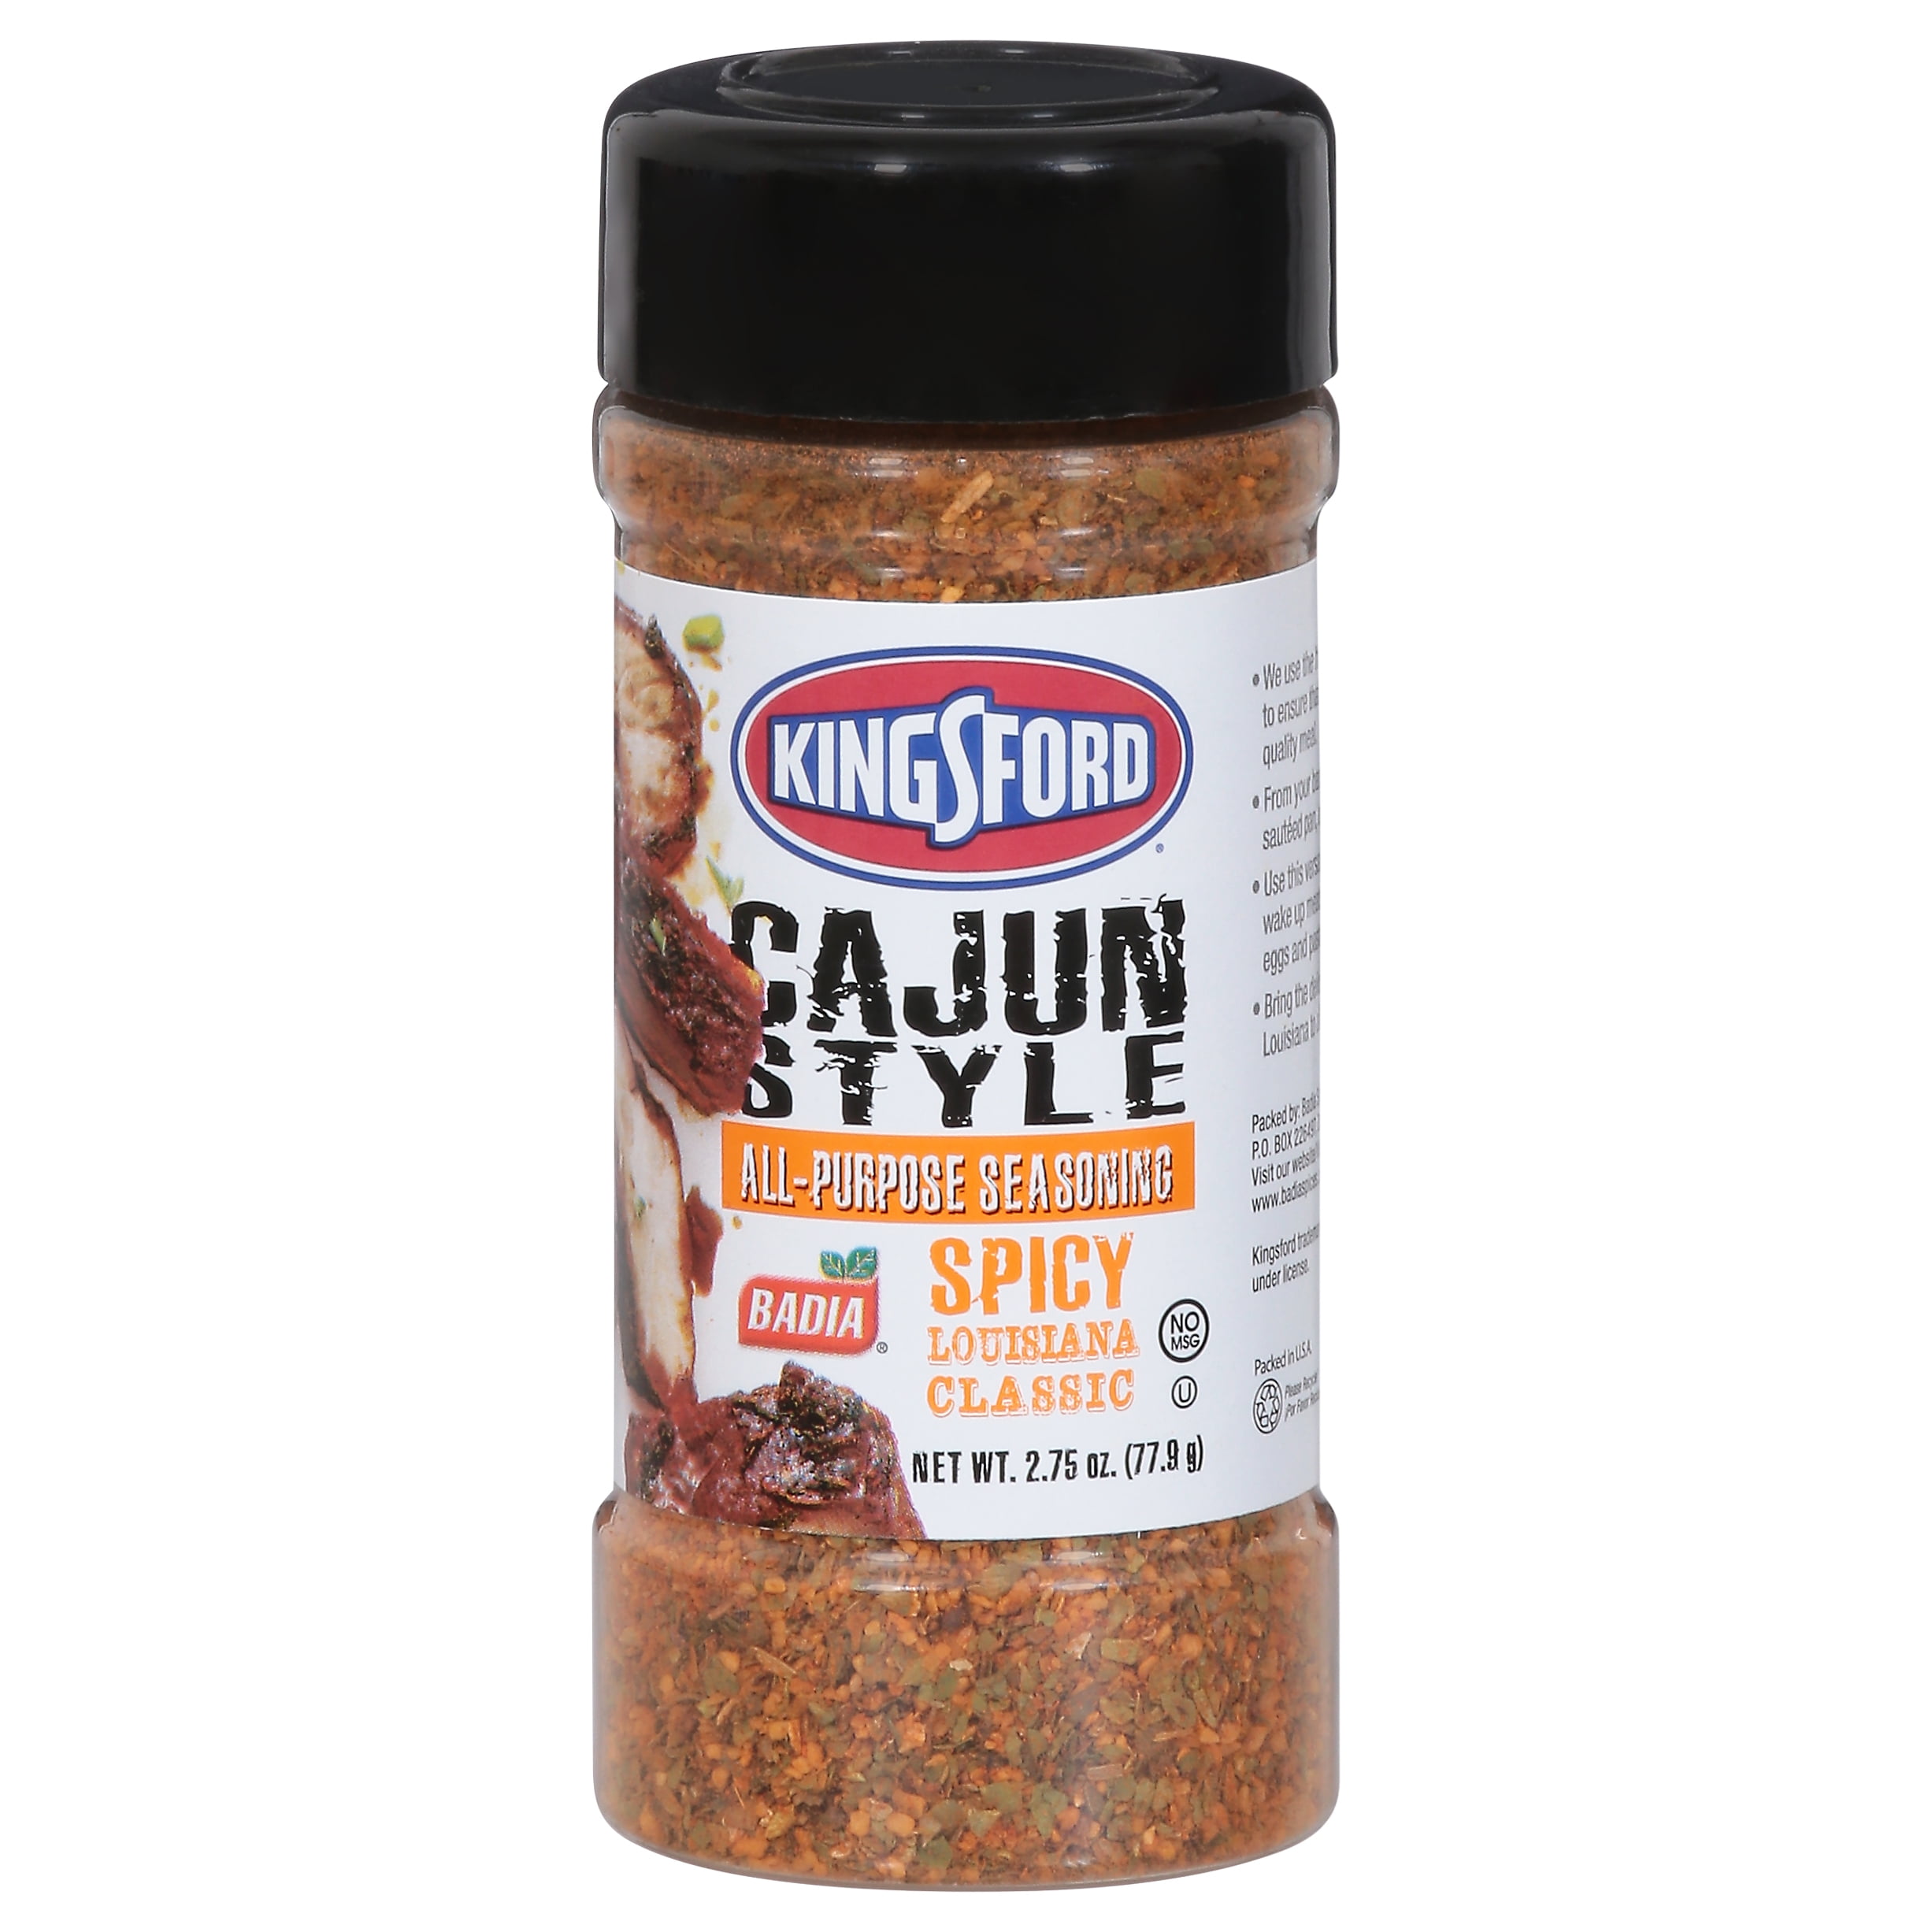 Louisiana Cajun Seasoning - 2.75 oz - Badia Spices